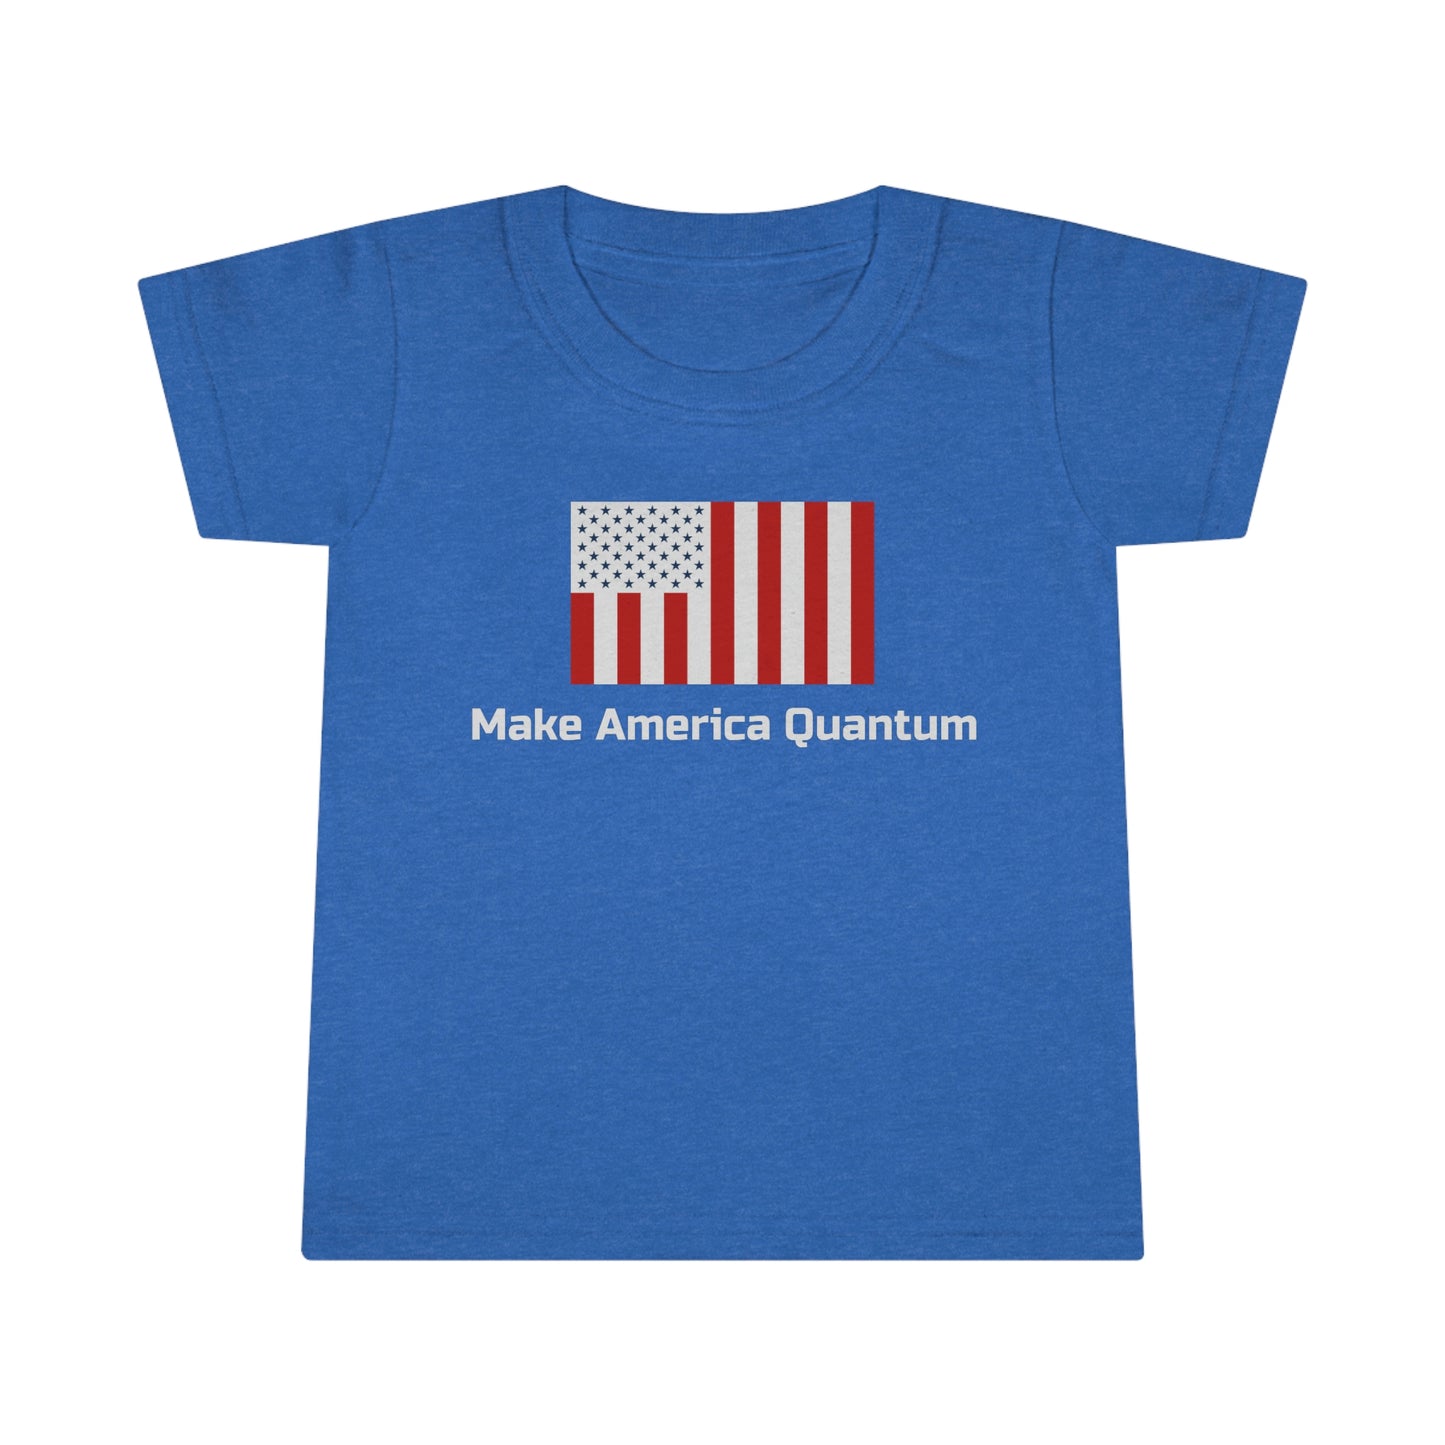 MAQ Toddler T-shirt